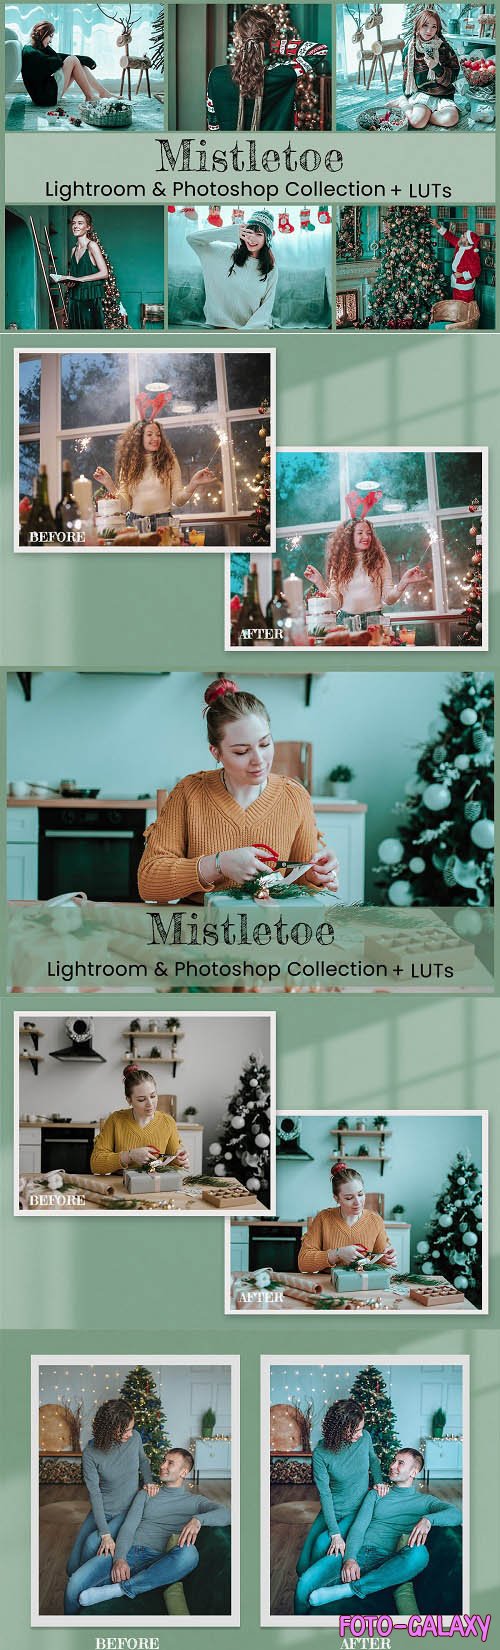 Mistletoe Lightroom Mobile Presets Photoshop Actions LUTs - 1618018